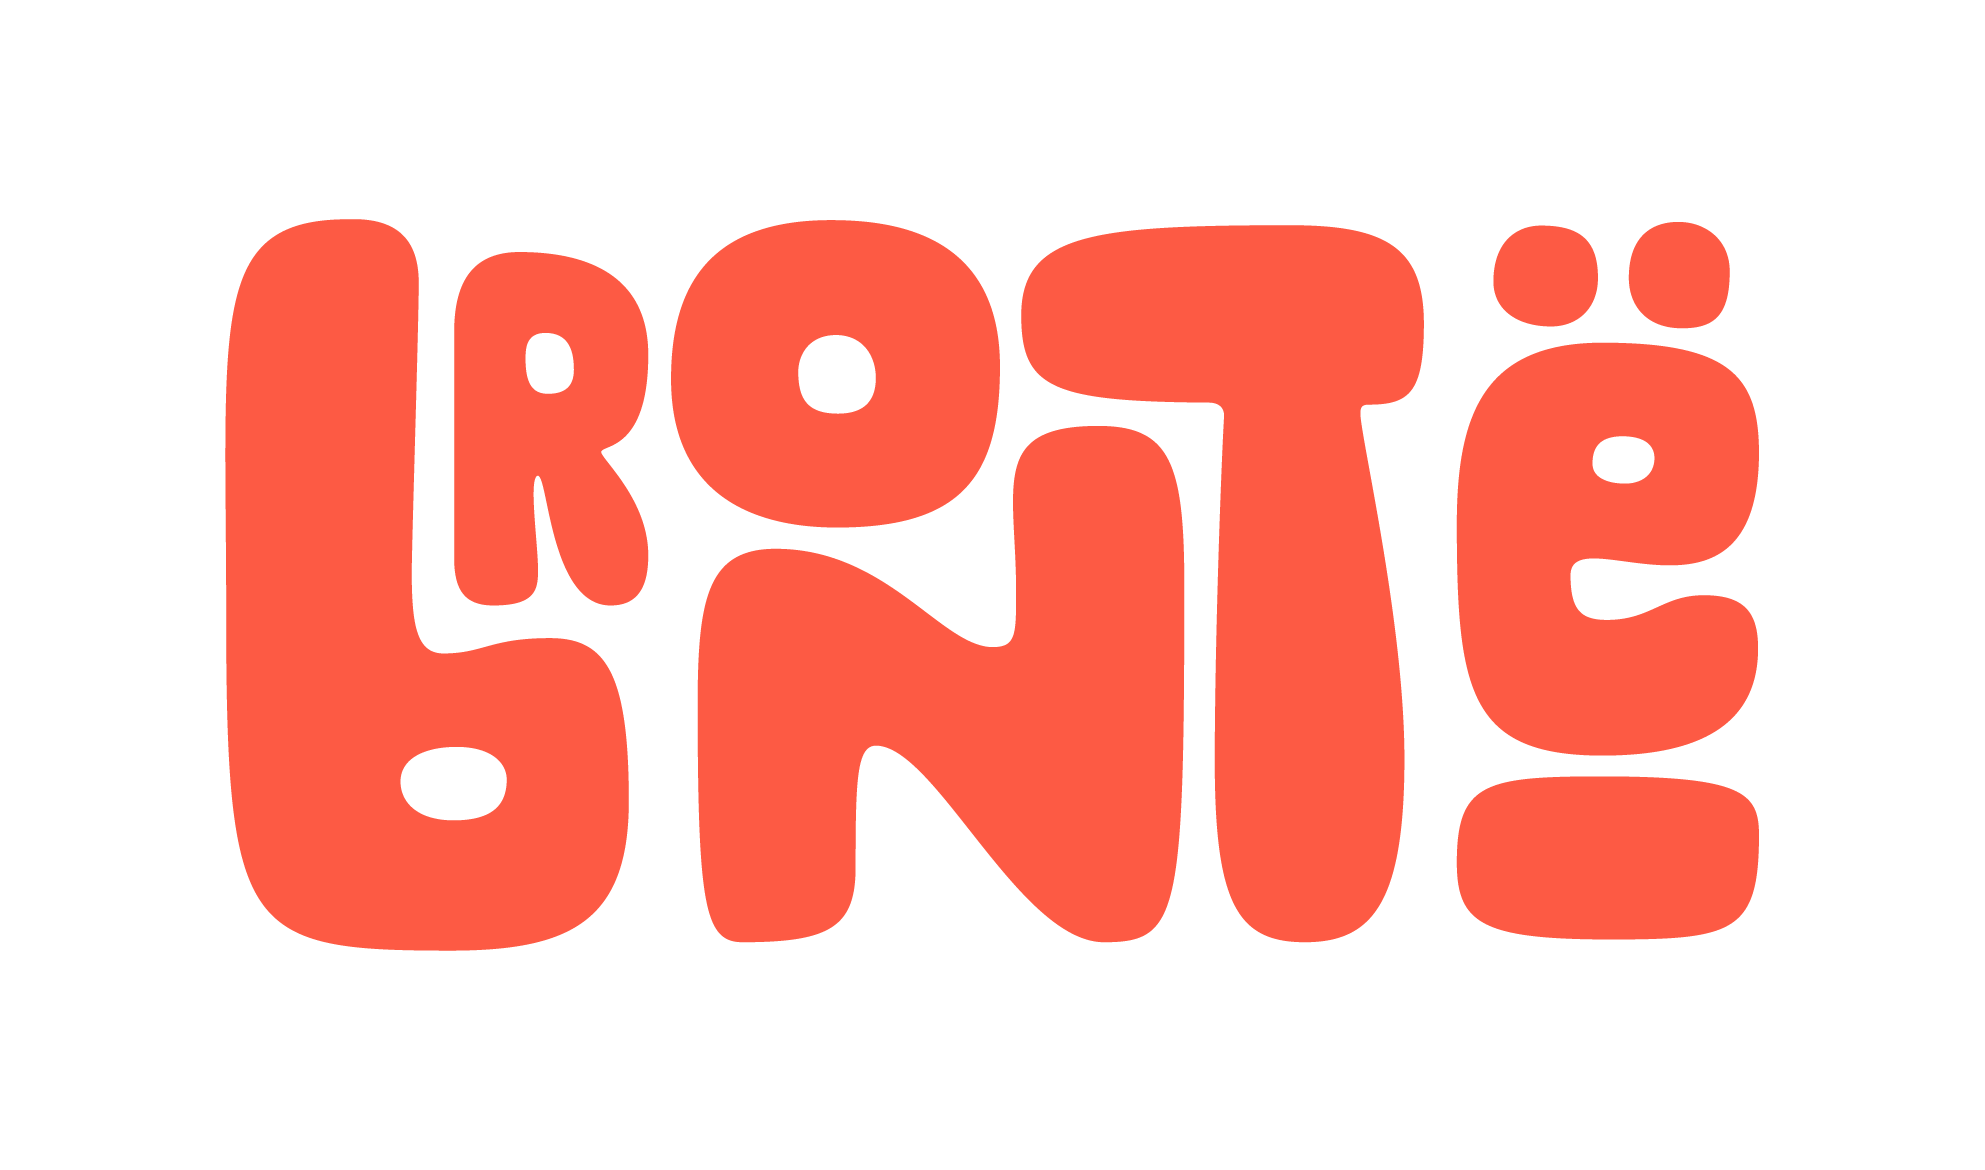 Bronte Logo 2.png